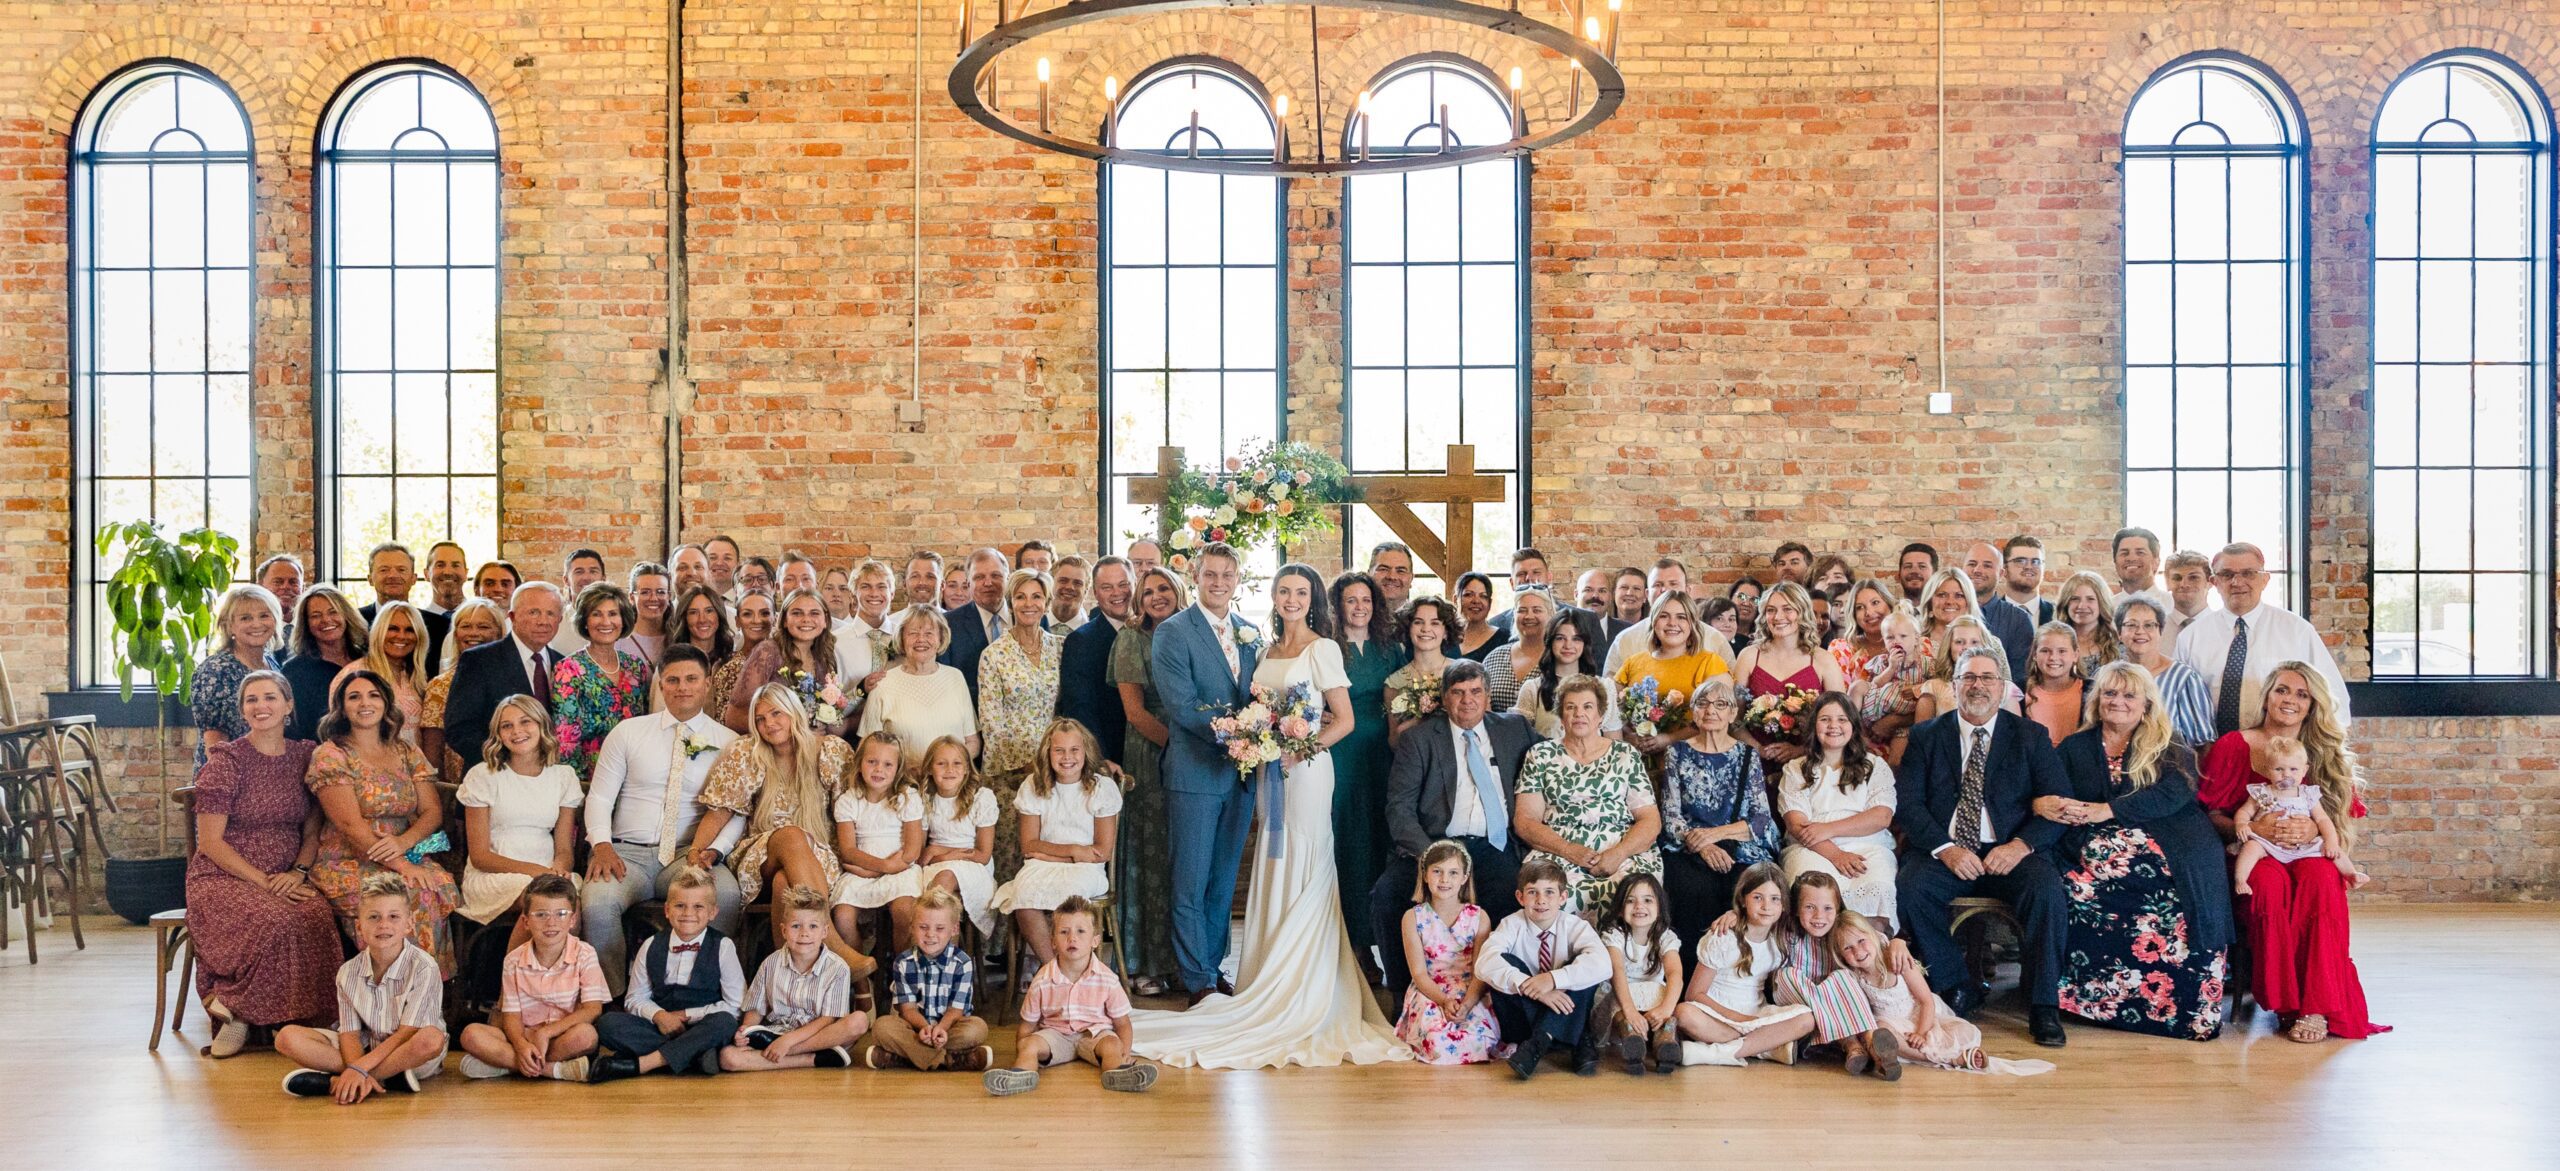 Provo Utah Wedding Photos